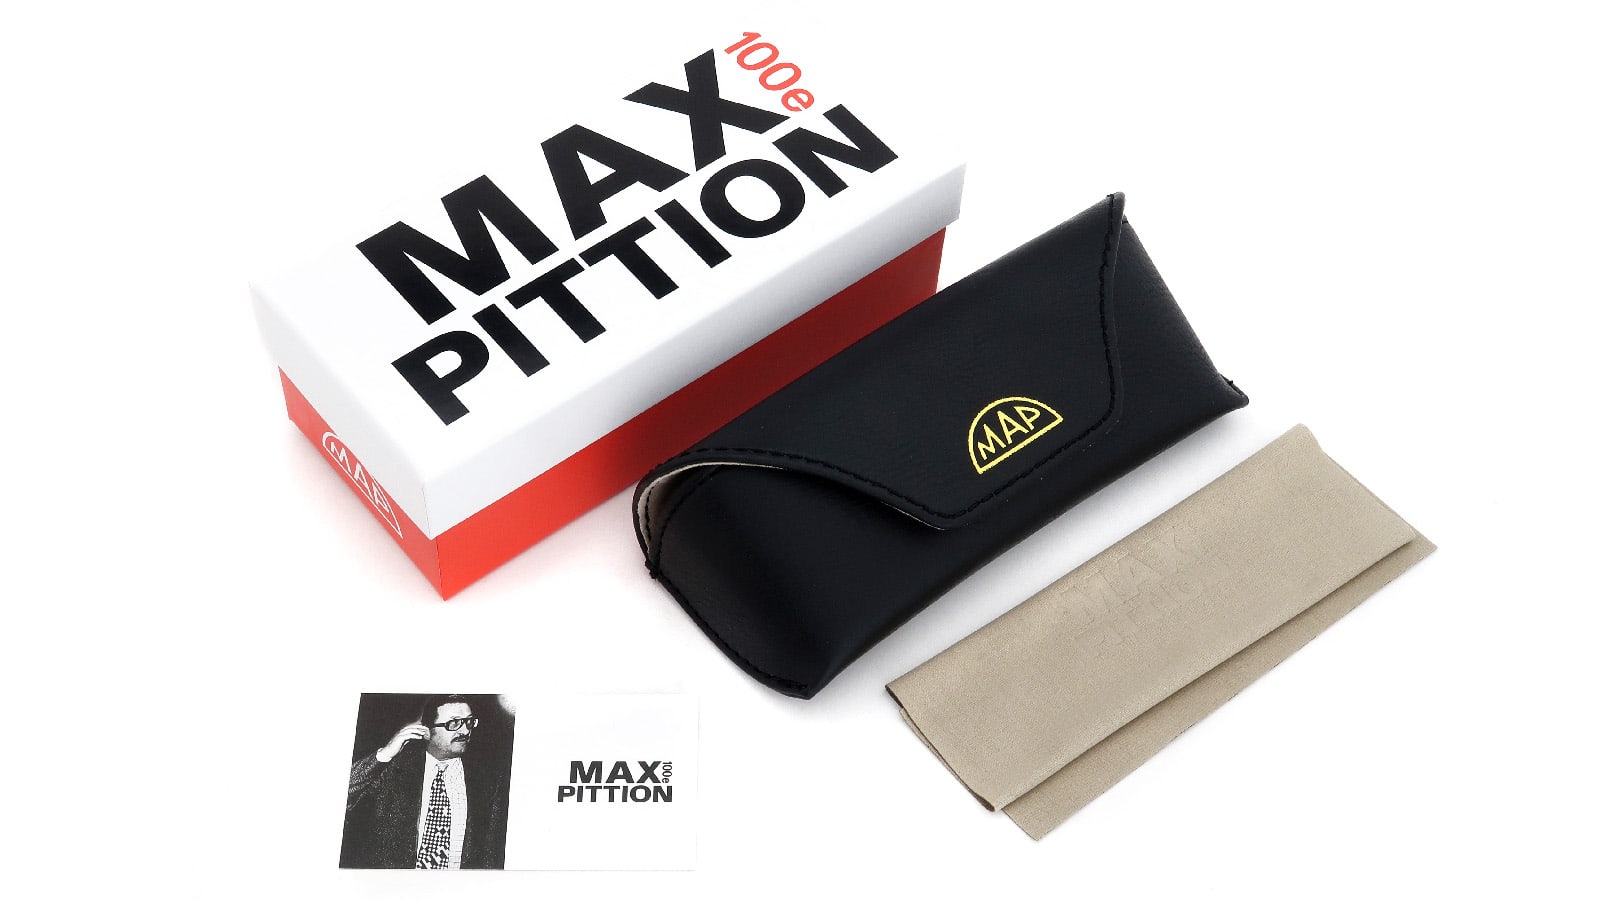 MAX PITTION MAESTRO 44/26 (PL-005D) BLONDE TORT 15